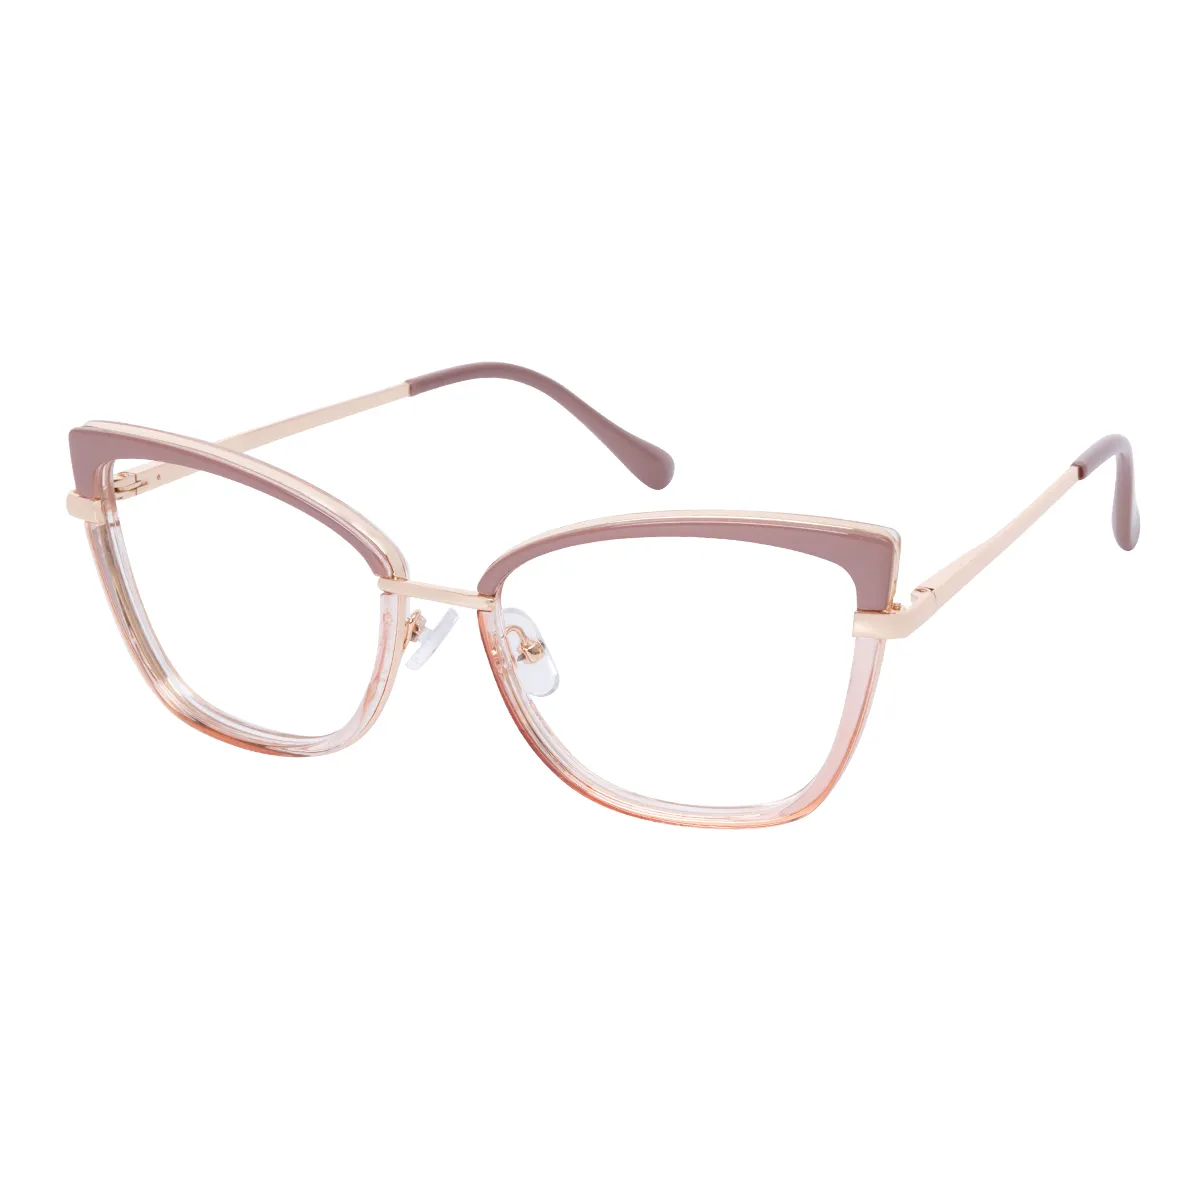 Keria - Square Brown Glasses for Women